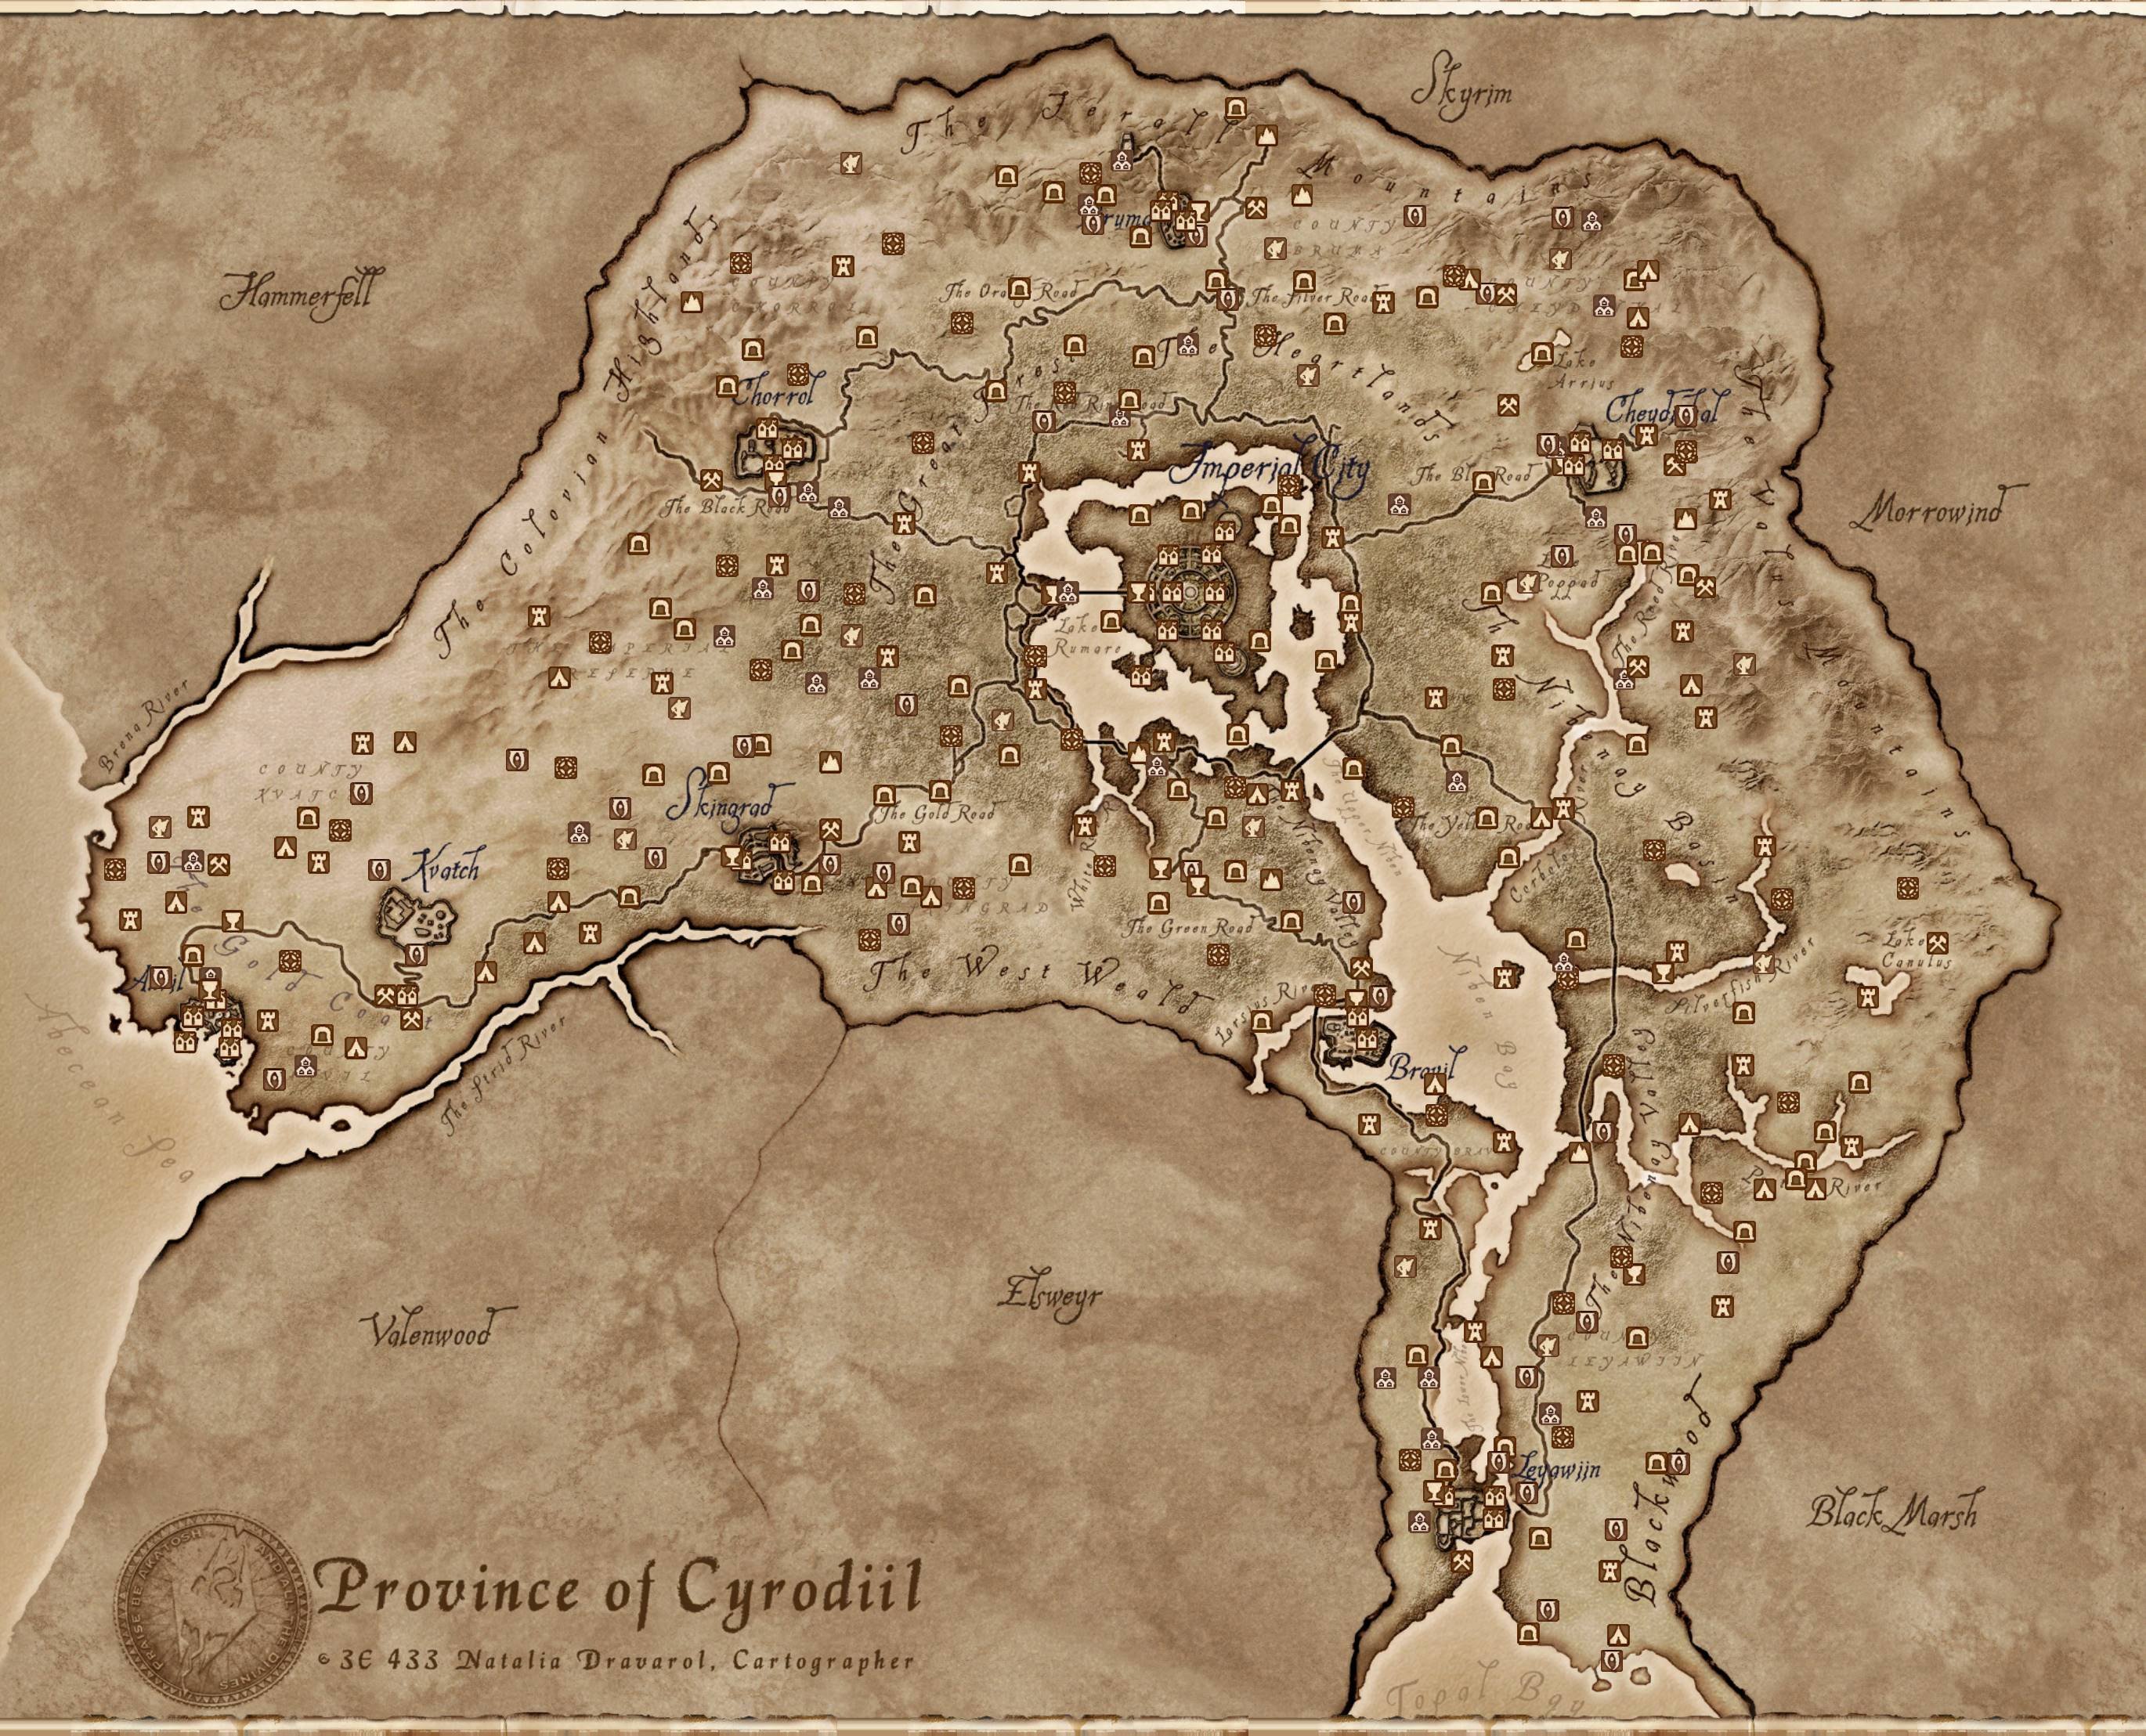 the elder scrolls vi map